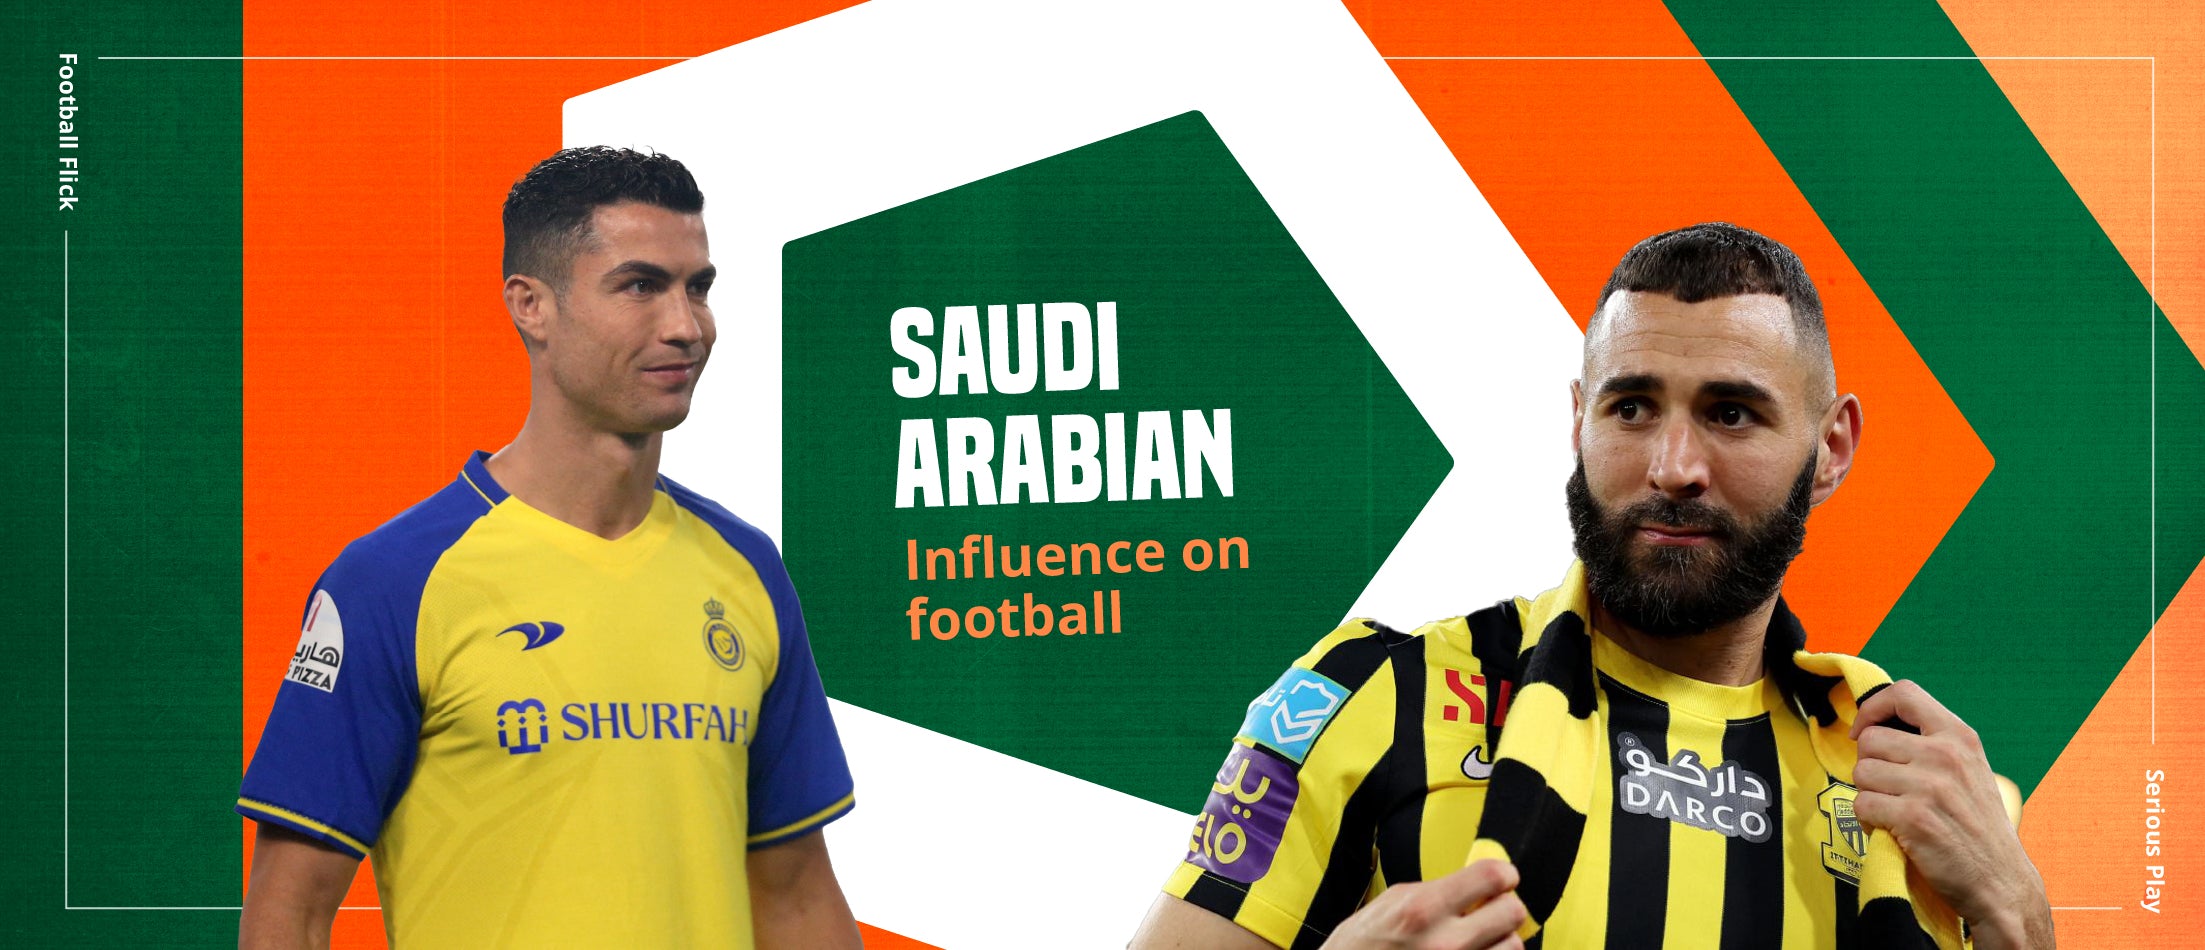 Saudi Arabian Influence on Football